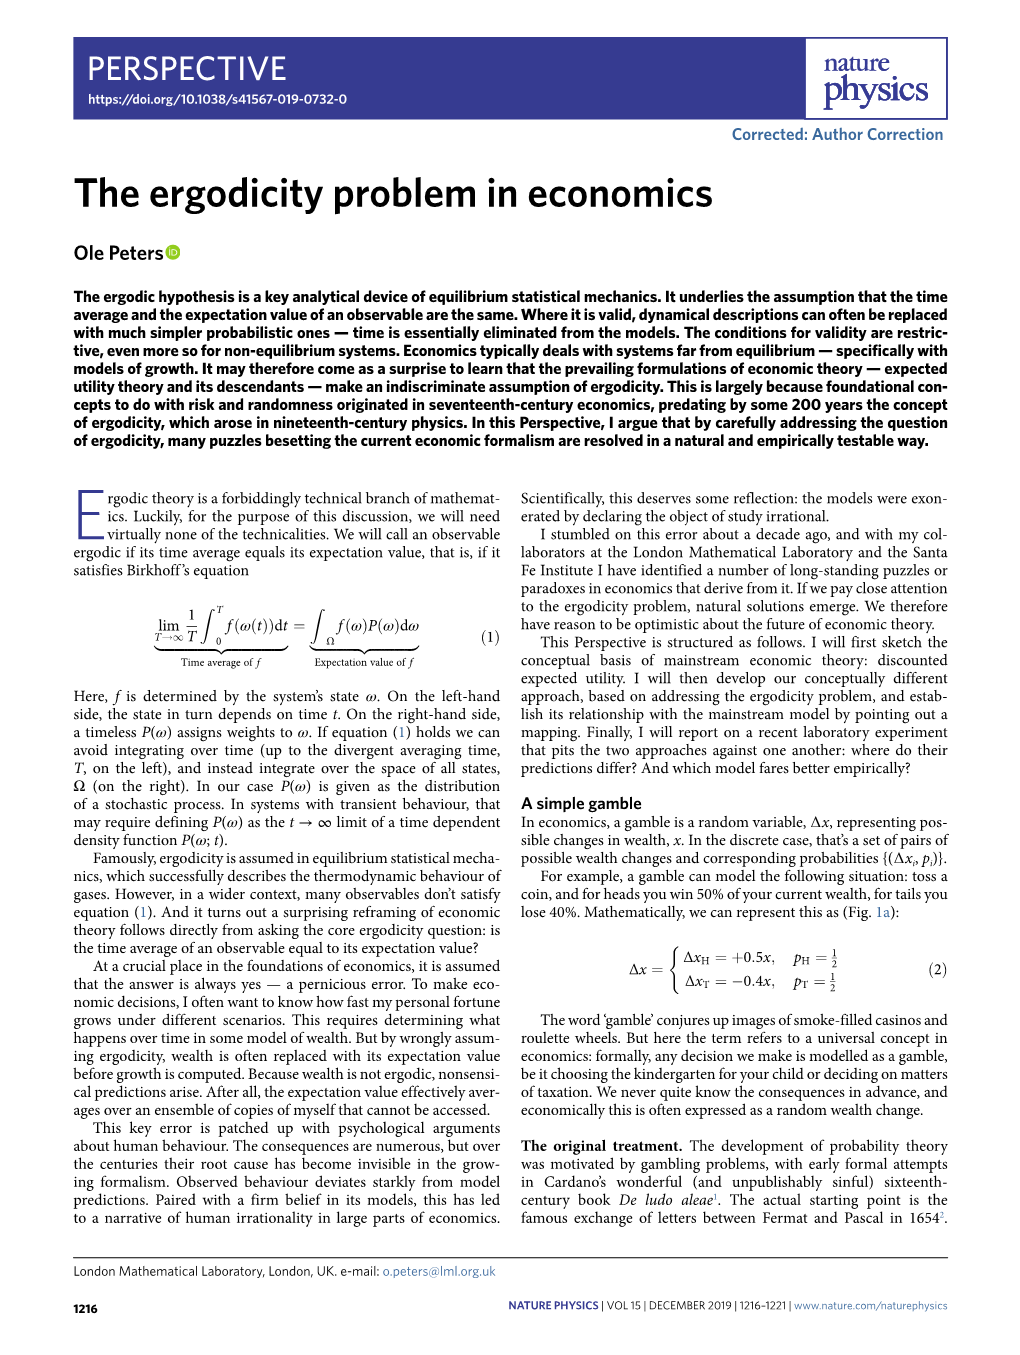 The Ergodicity Problem in Economics